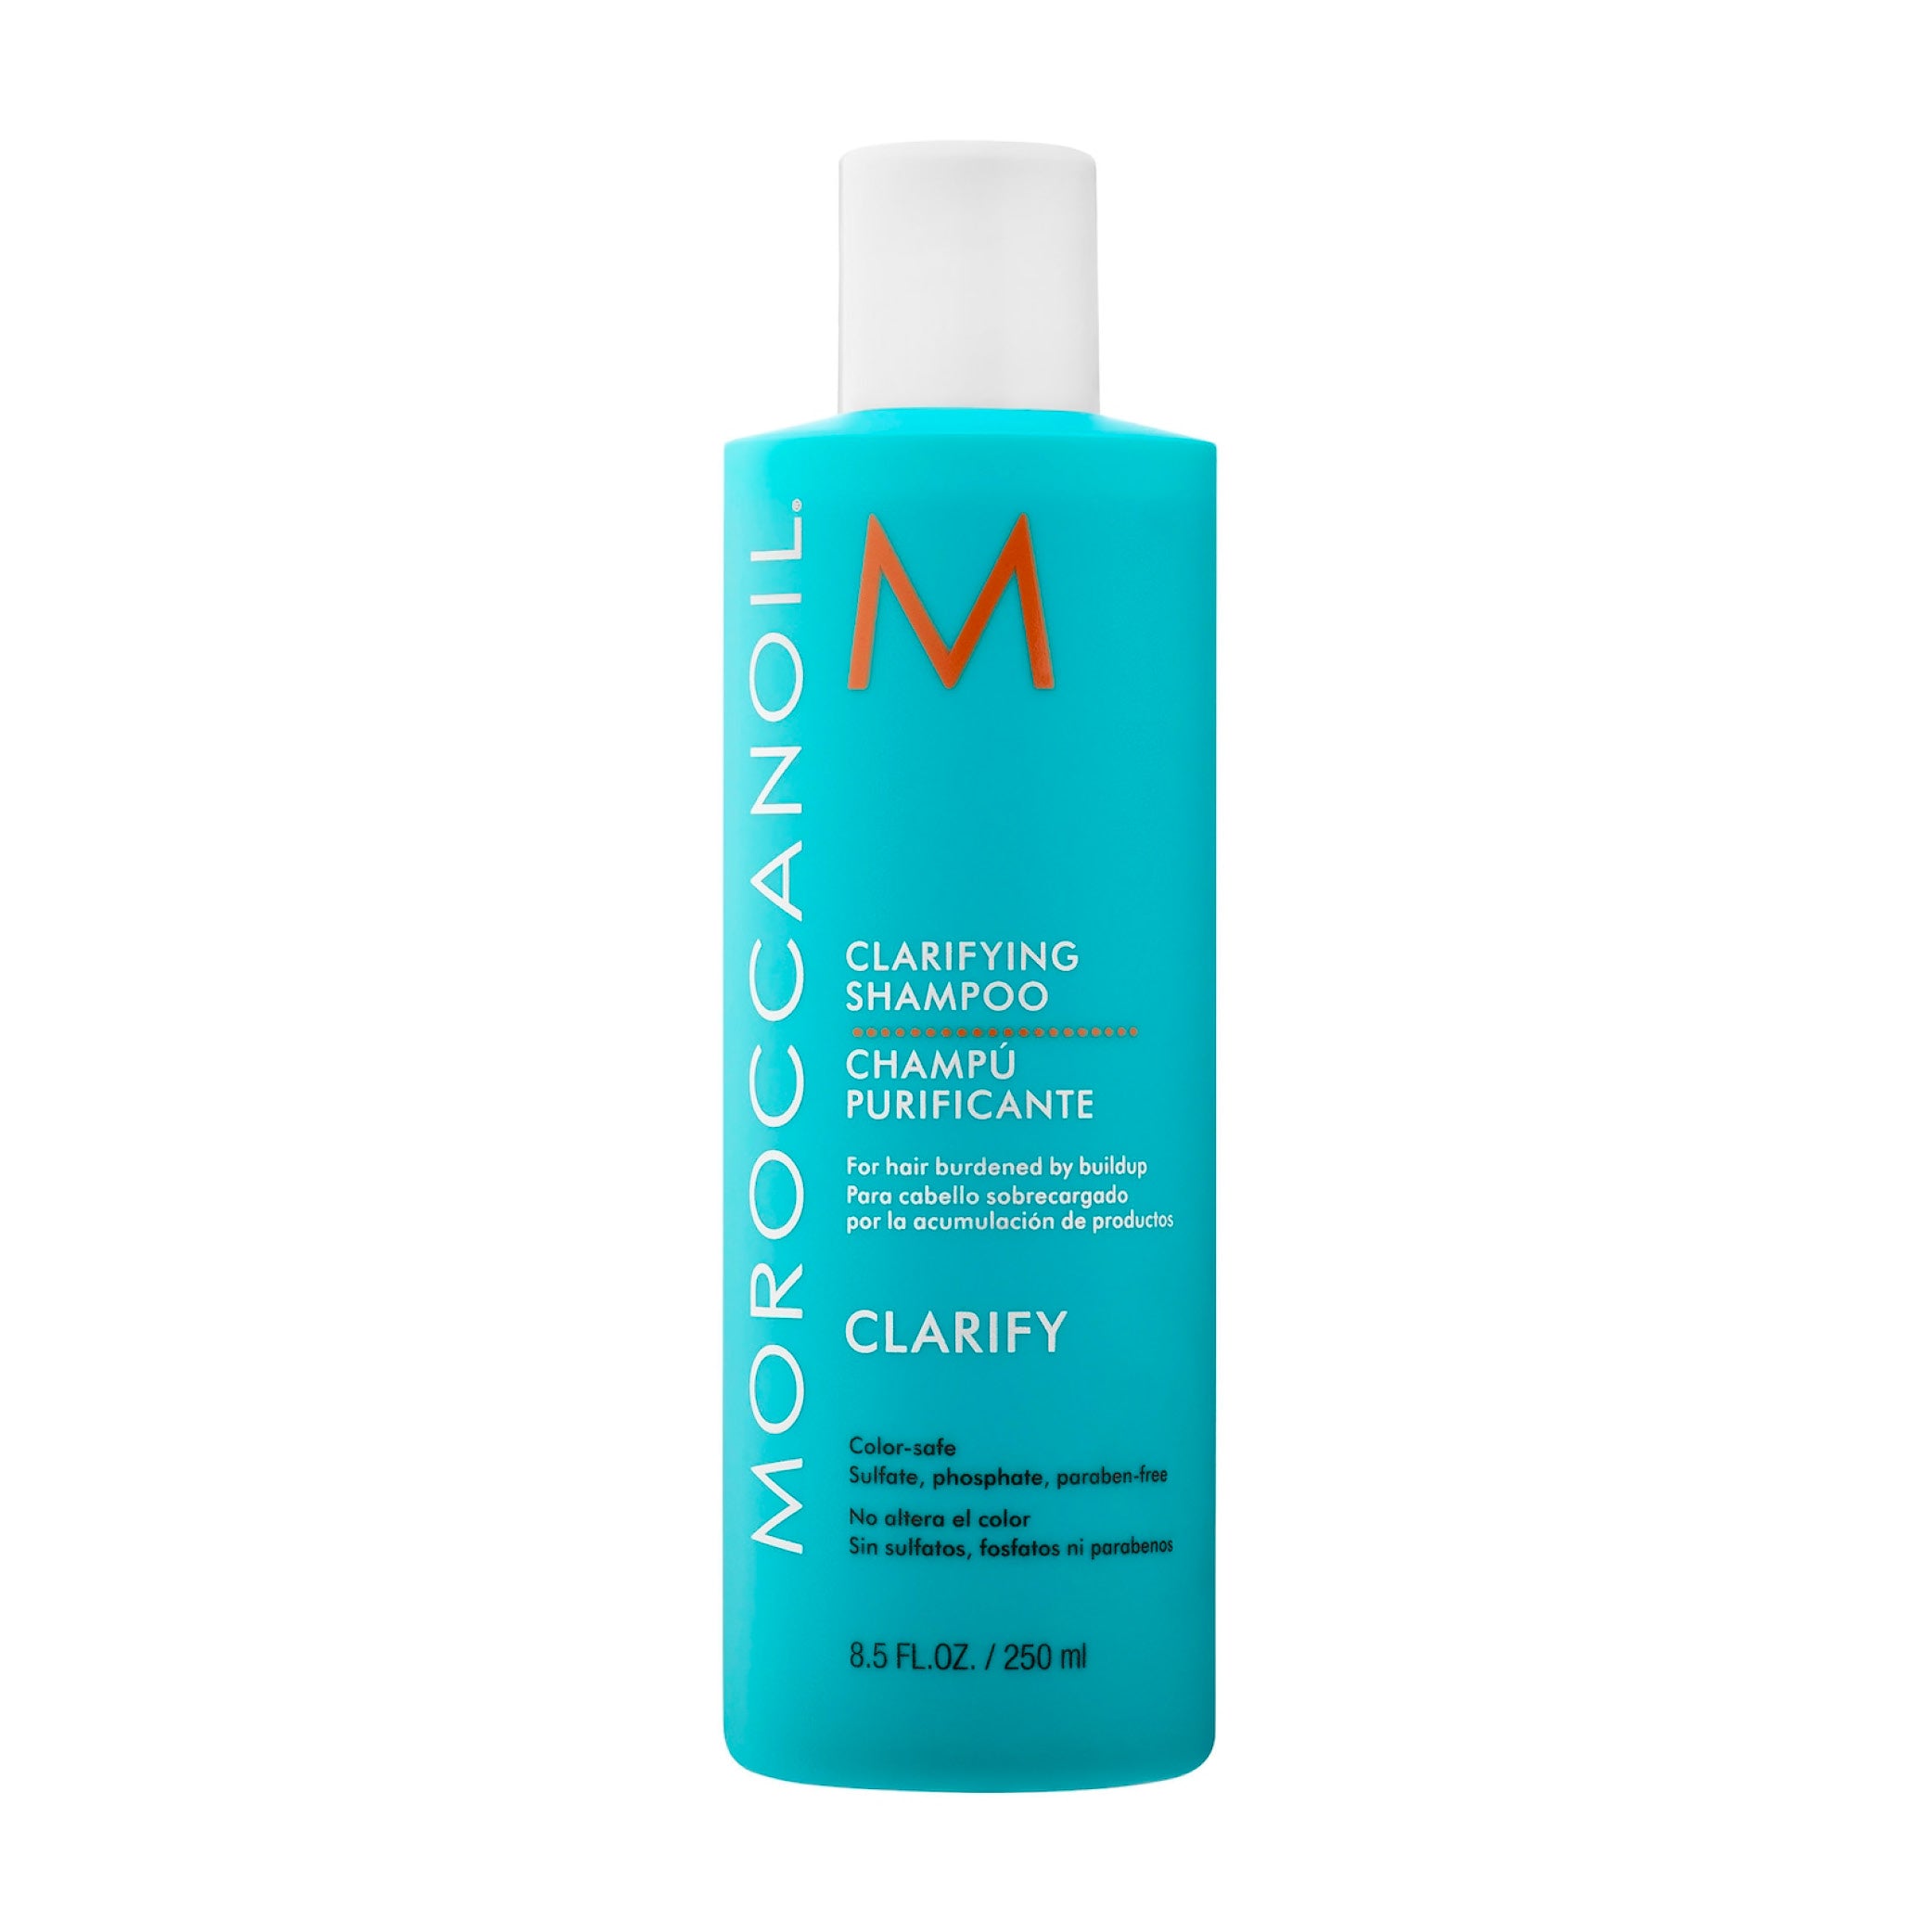   moroccanoil clarify shampoo